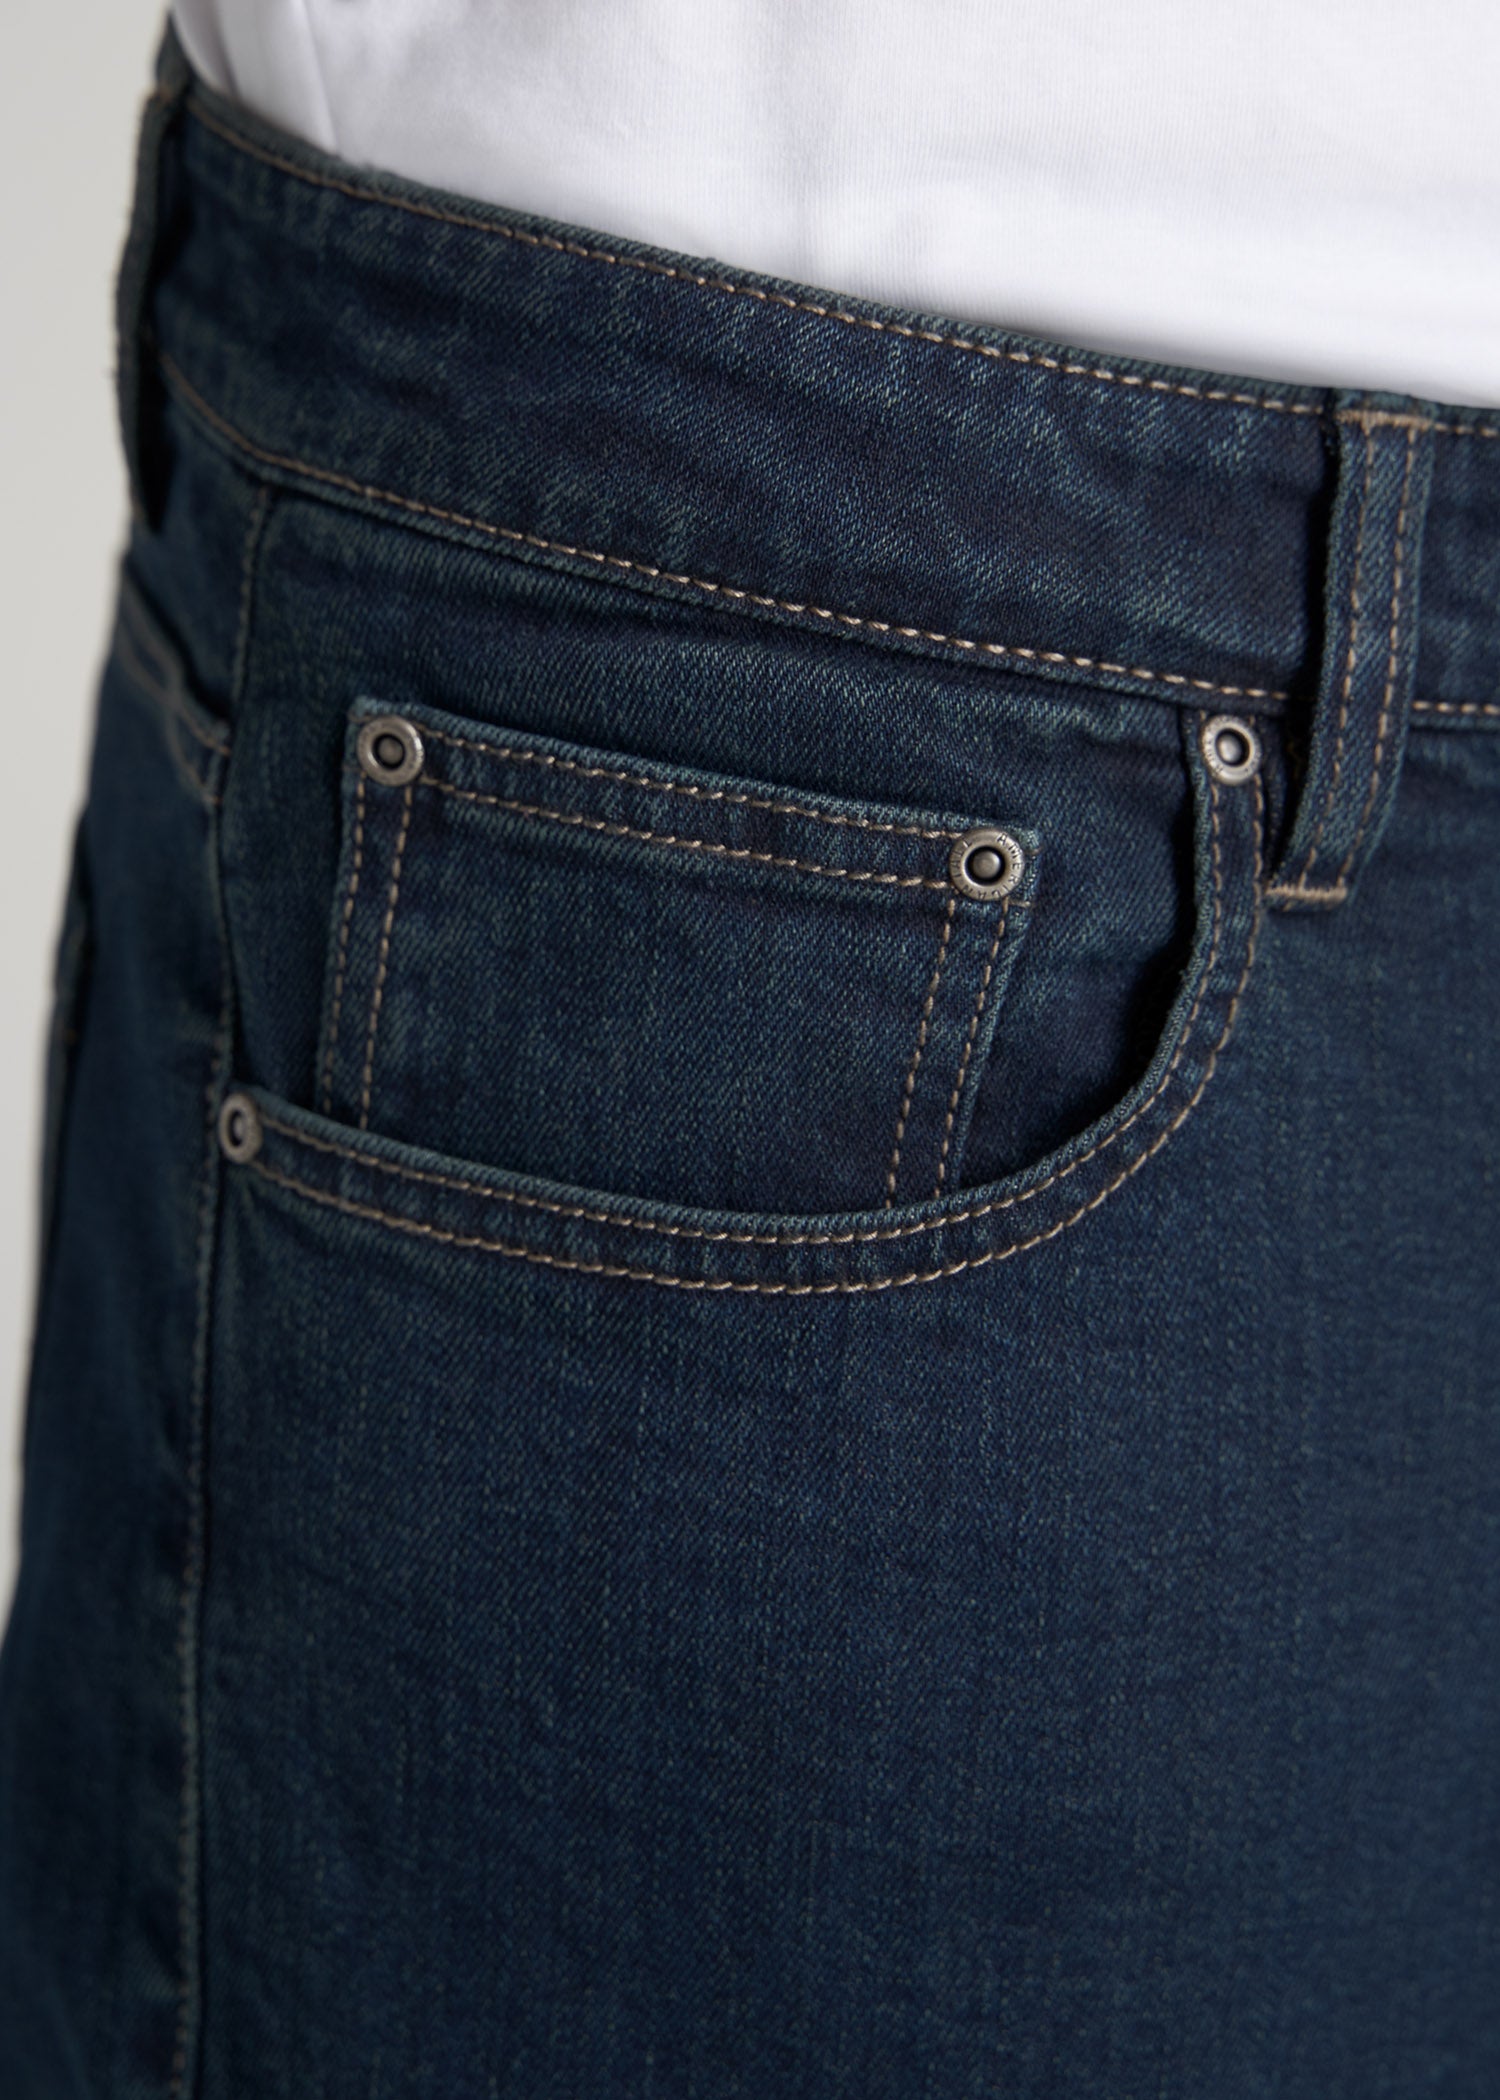    American-Tall-Men-J1-Jeans-Deep-Blue-Rinse-pocket